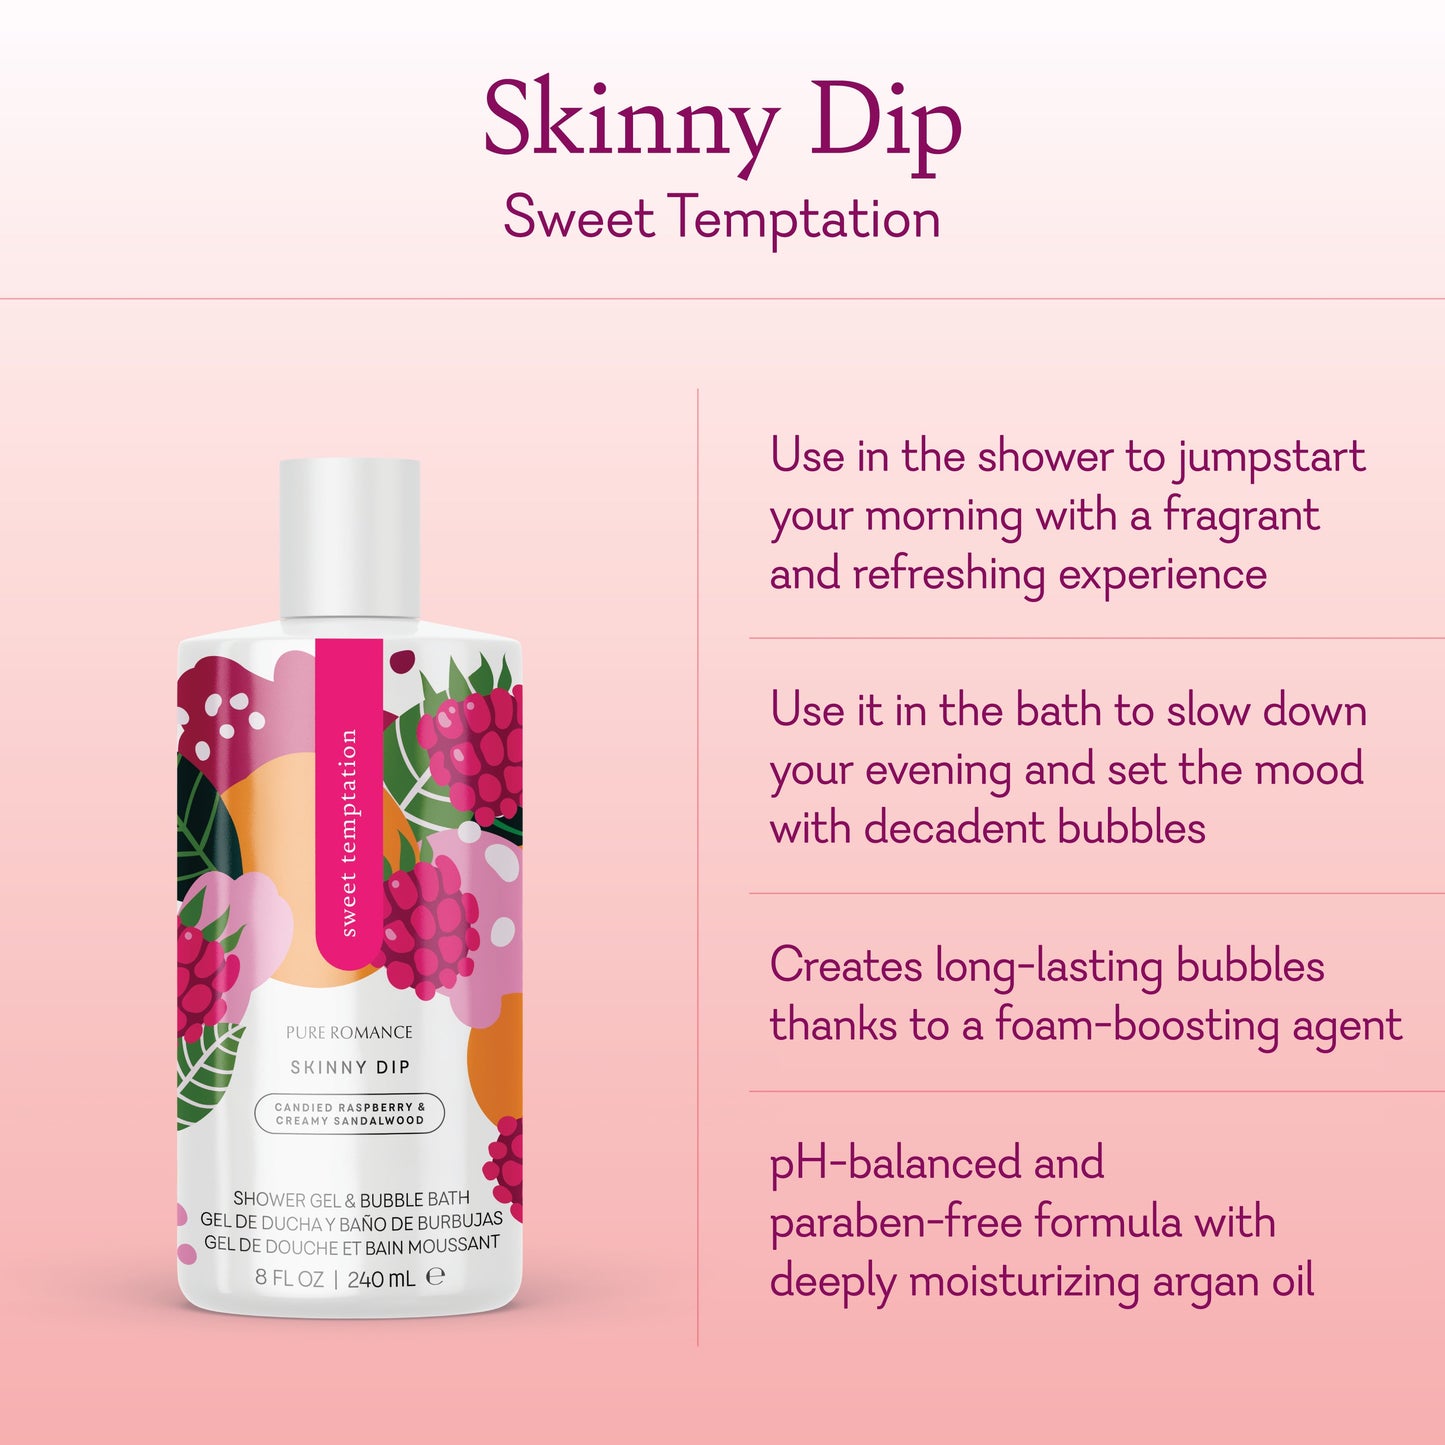 Skinny Dip -Sweet Temptation